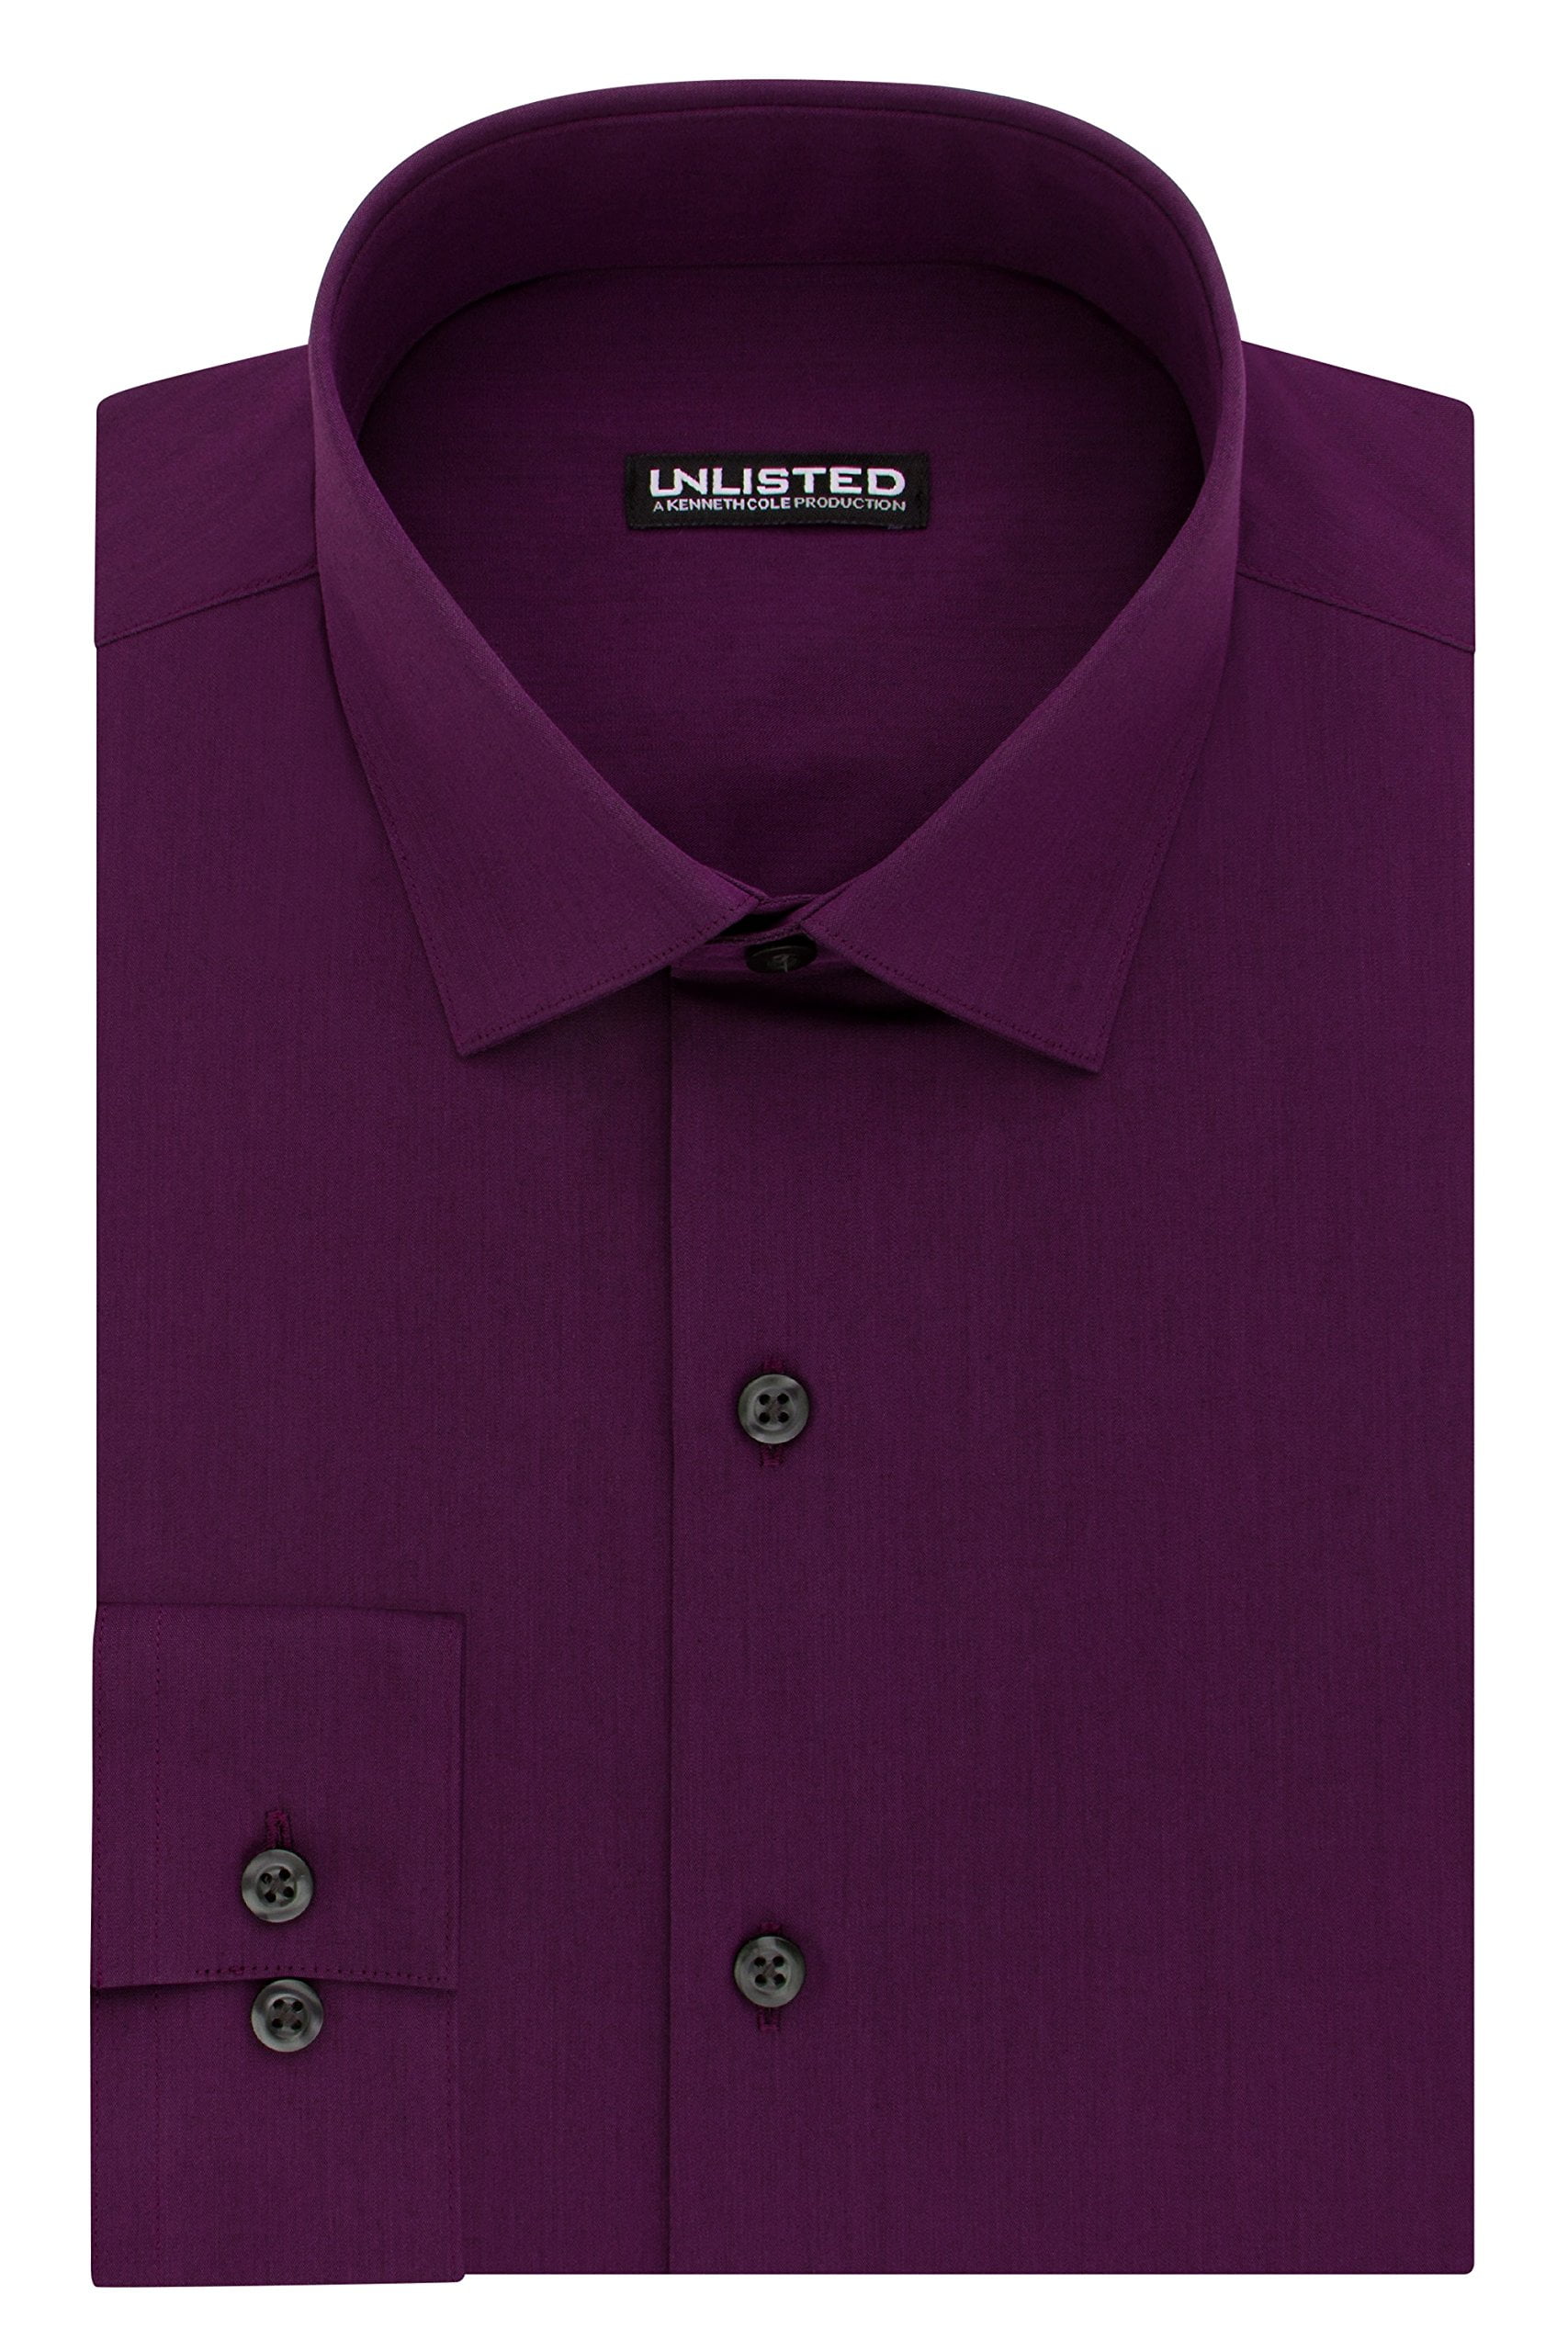 Unlisted NEW Raspberry Purple Mens Size 16 1/2 Slim-Fit Dress Shirt ...